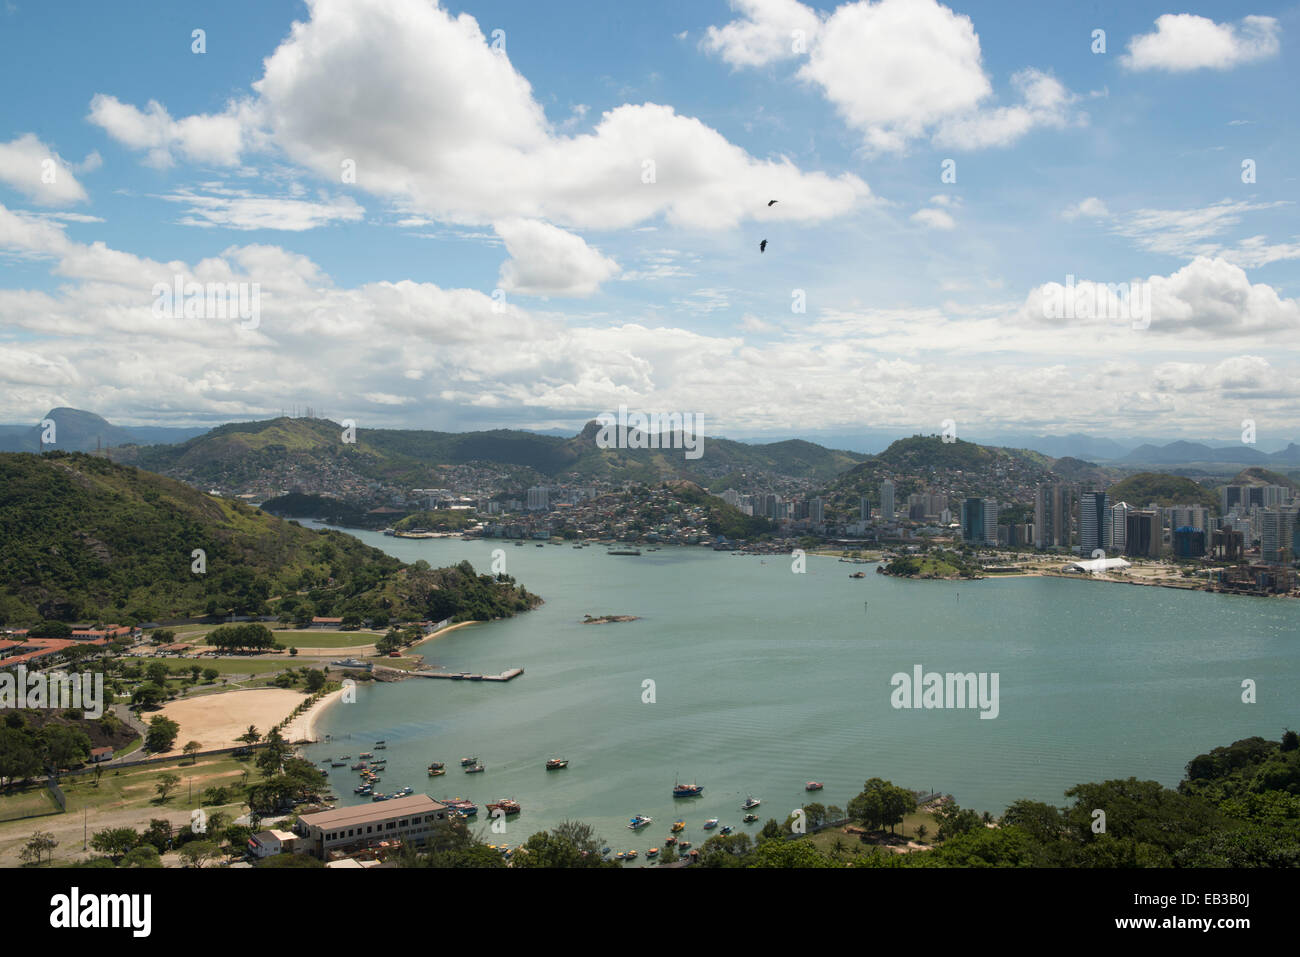 Aerial view of Vitoria harbor, Santo, Brazil Stock Photo